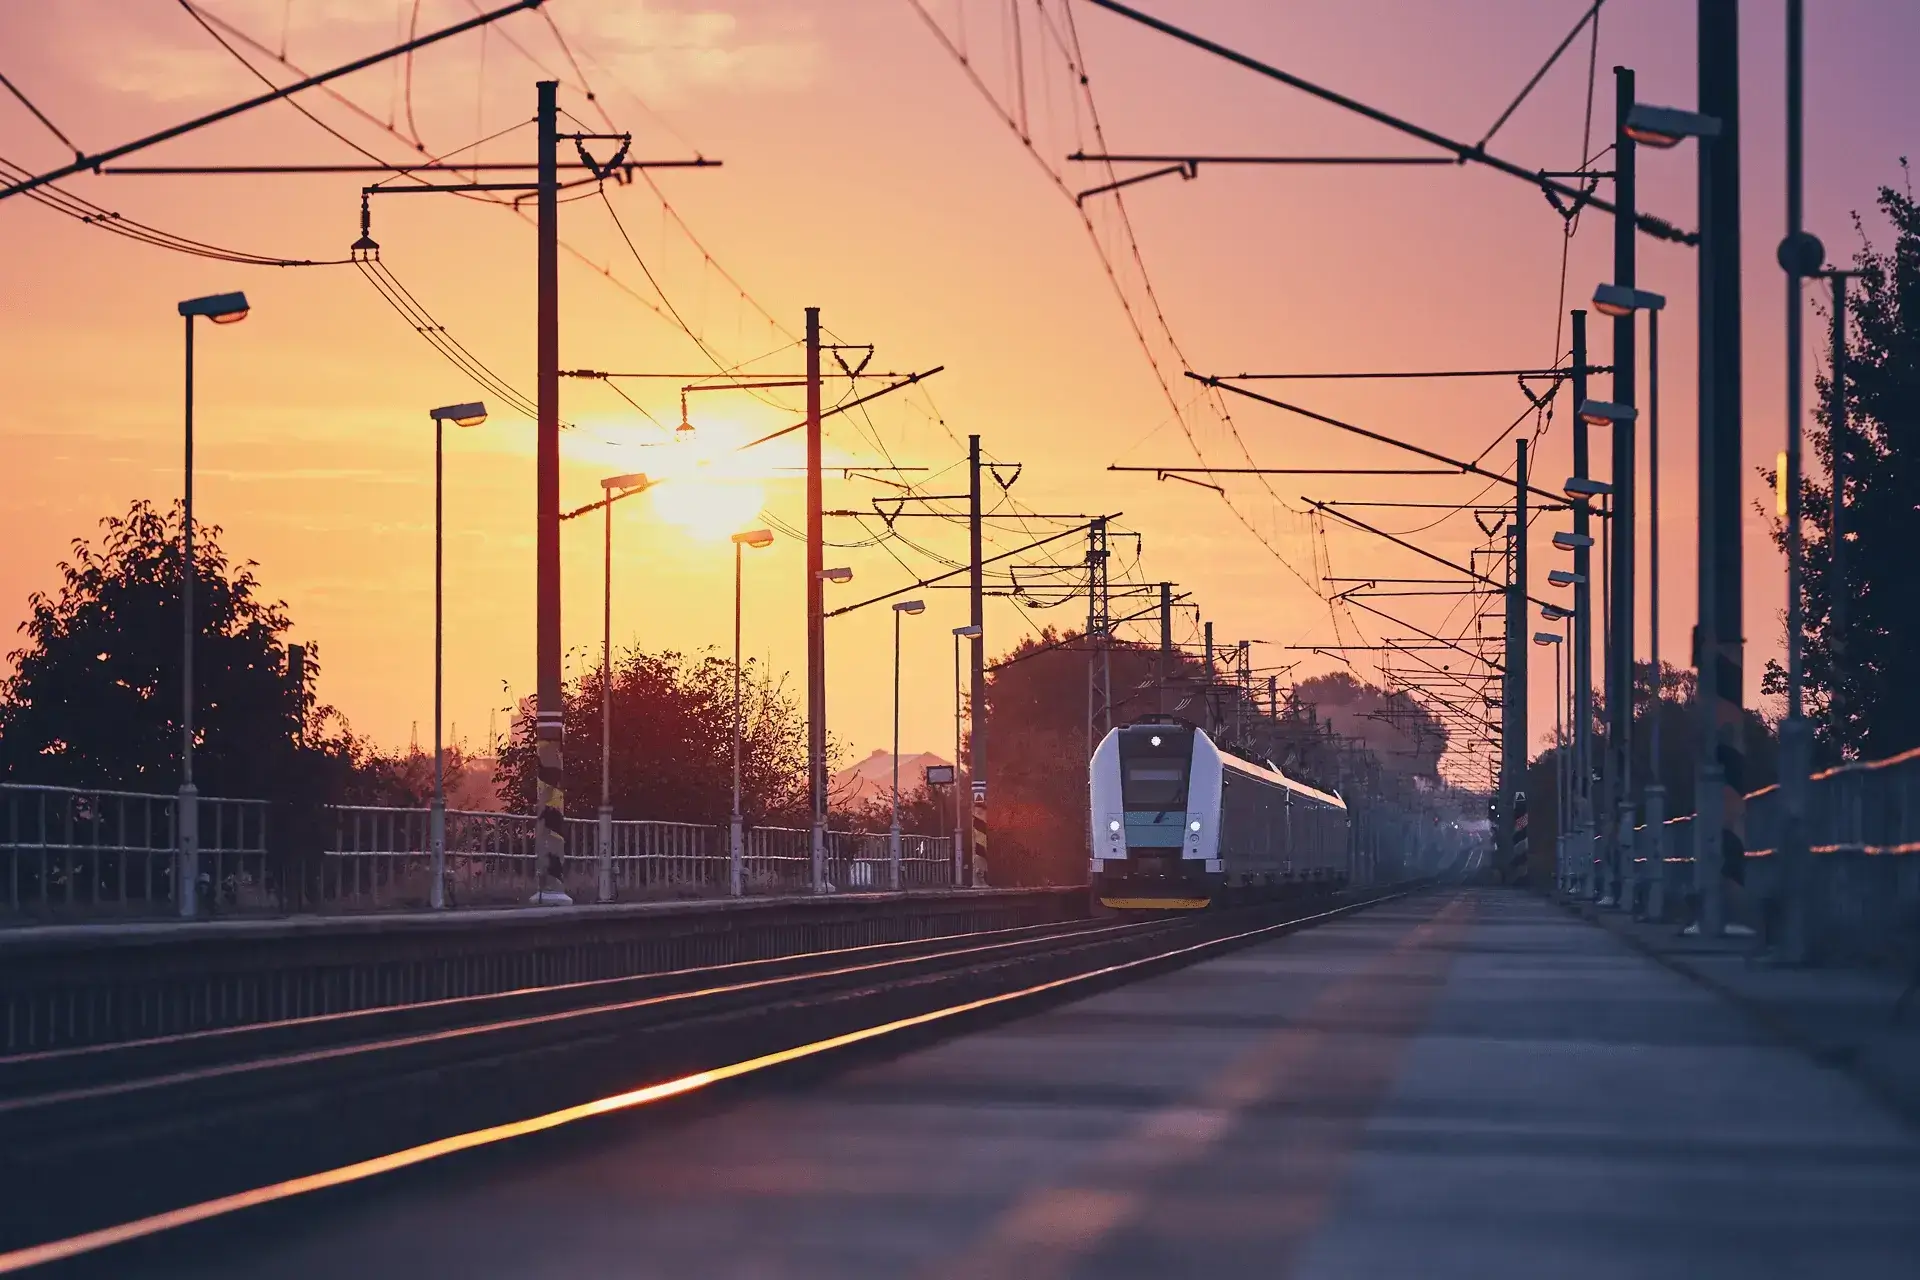 Passenger train on railway tracks at sunrise, powered by OLE